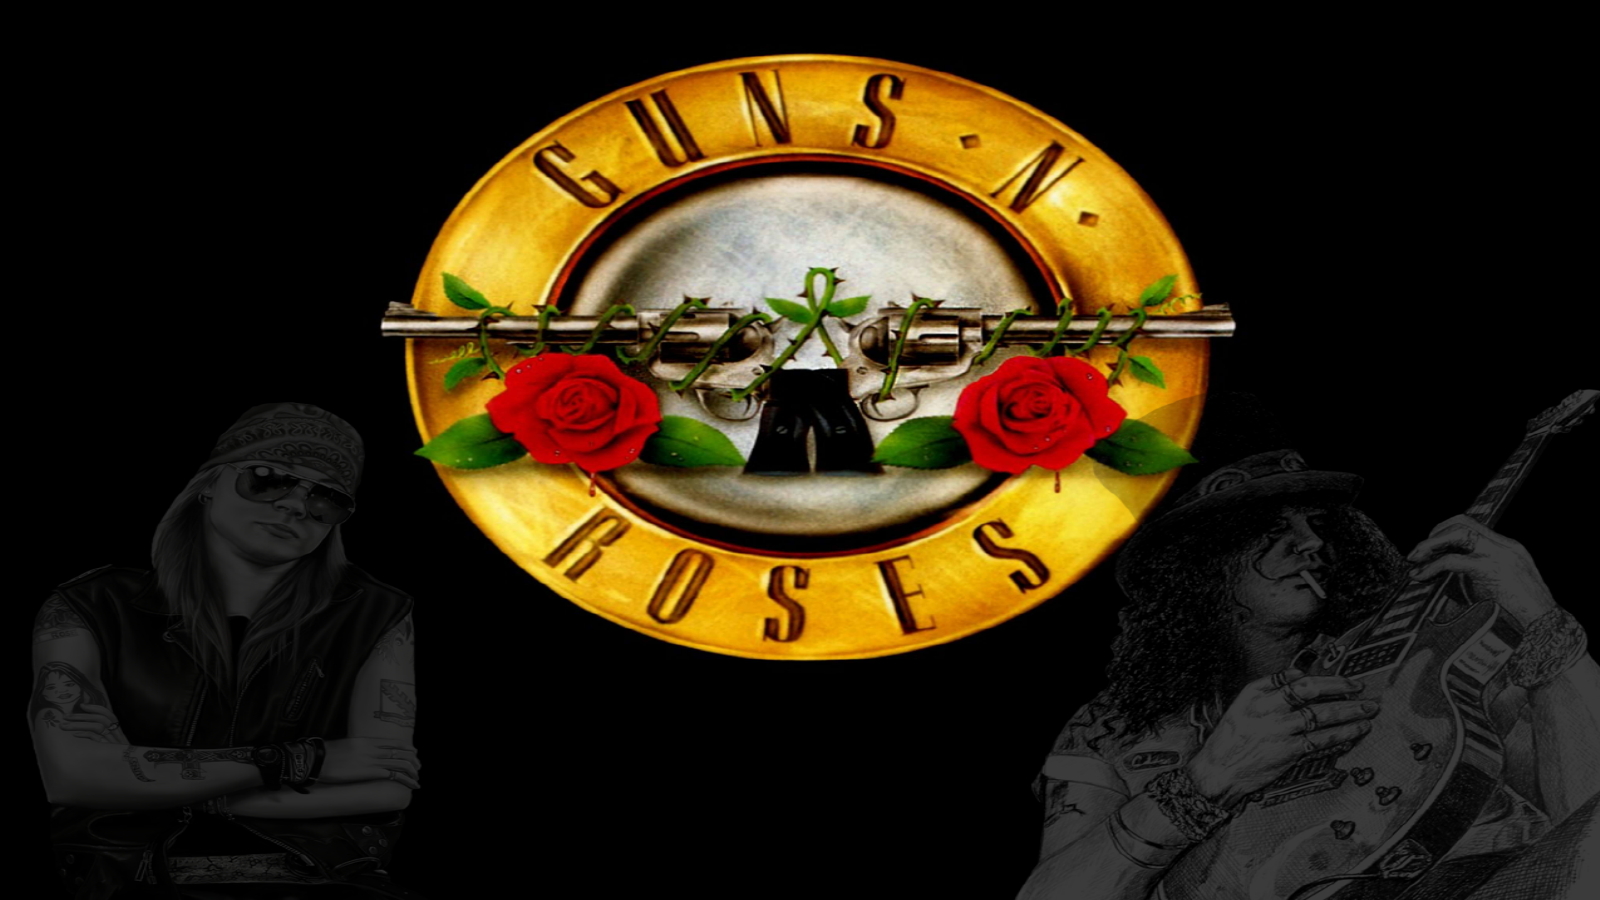 Guns N Roses Heavy Metal Hard Rock Bands Groups Album Cover Logo